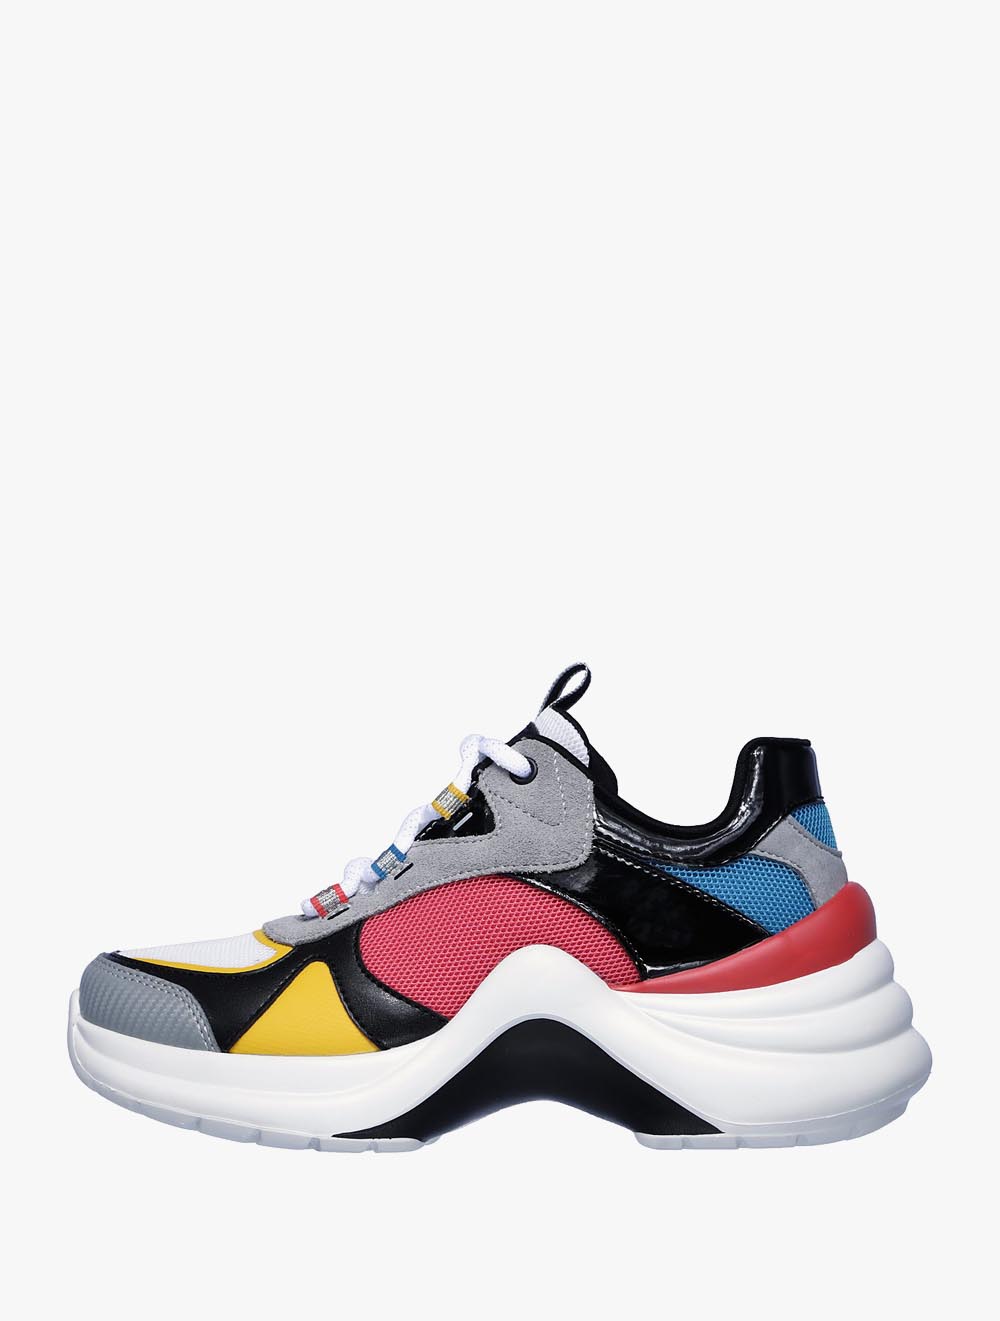 Skechers Solei St. - Groovy Sole Womens Sneakers Shoes - Multicolor